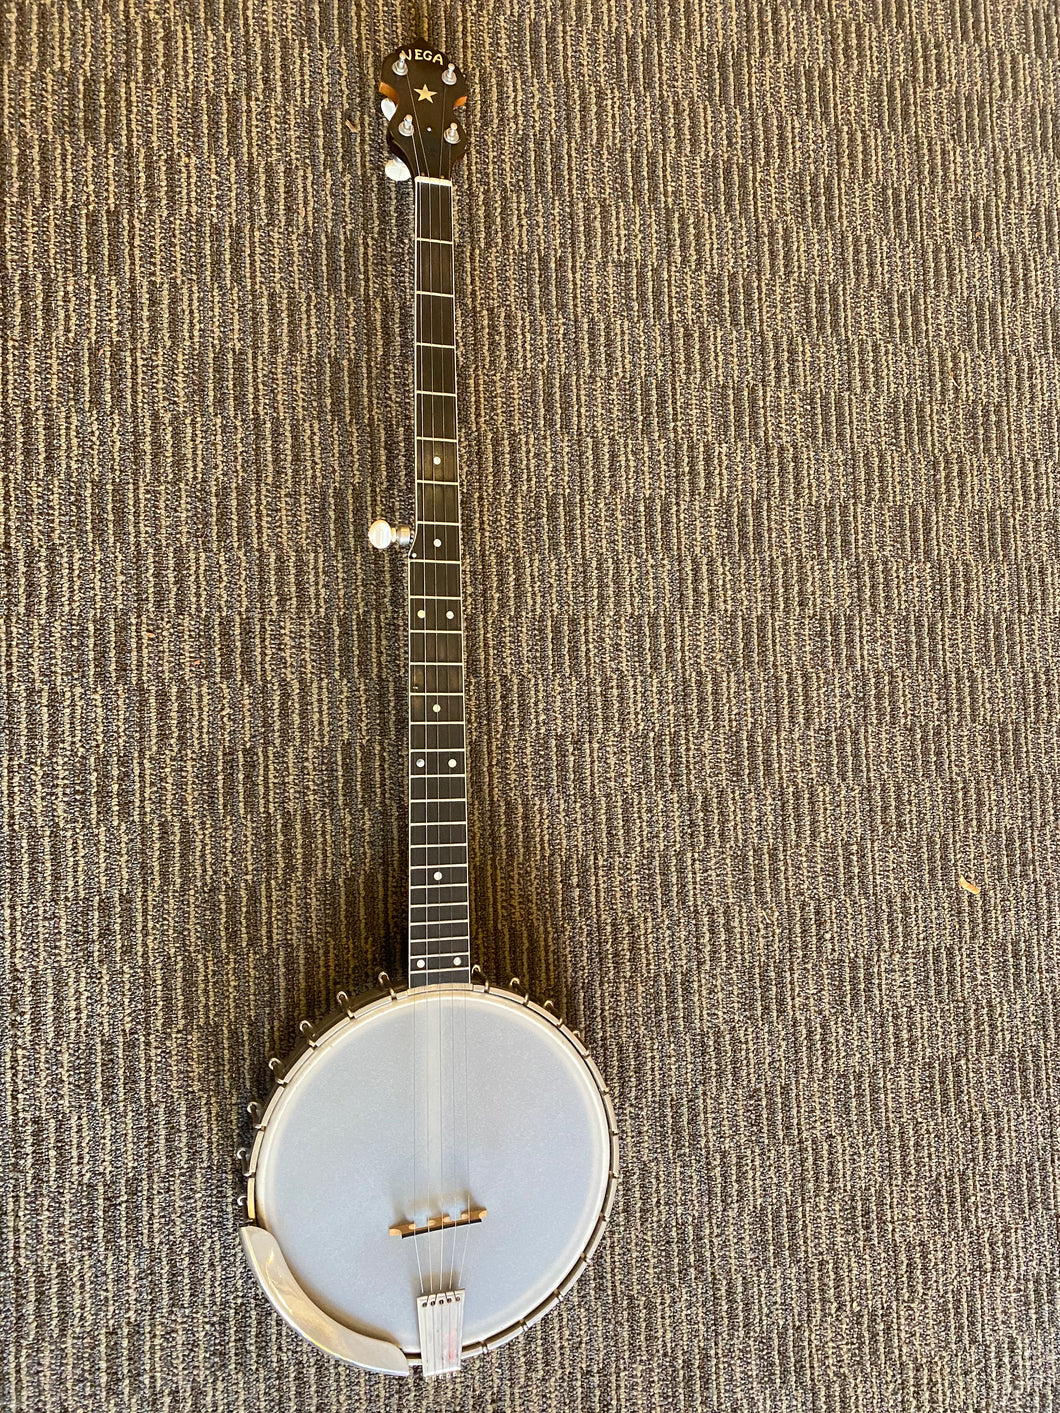 Vega Pete Seeger longneck banjo 1960's